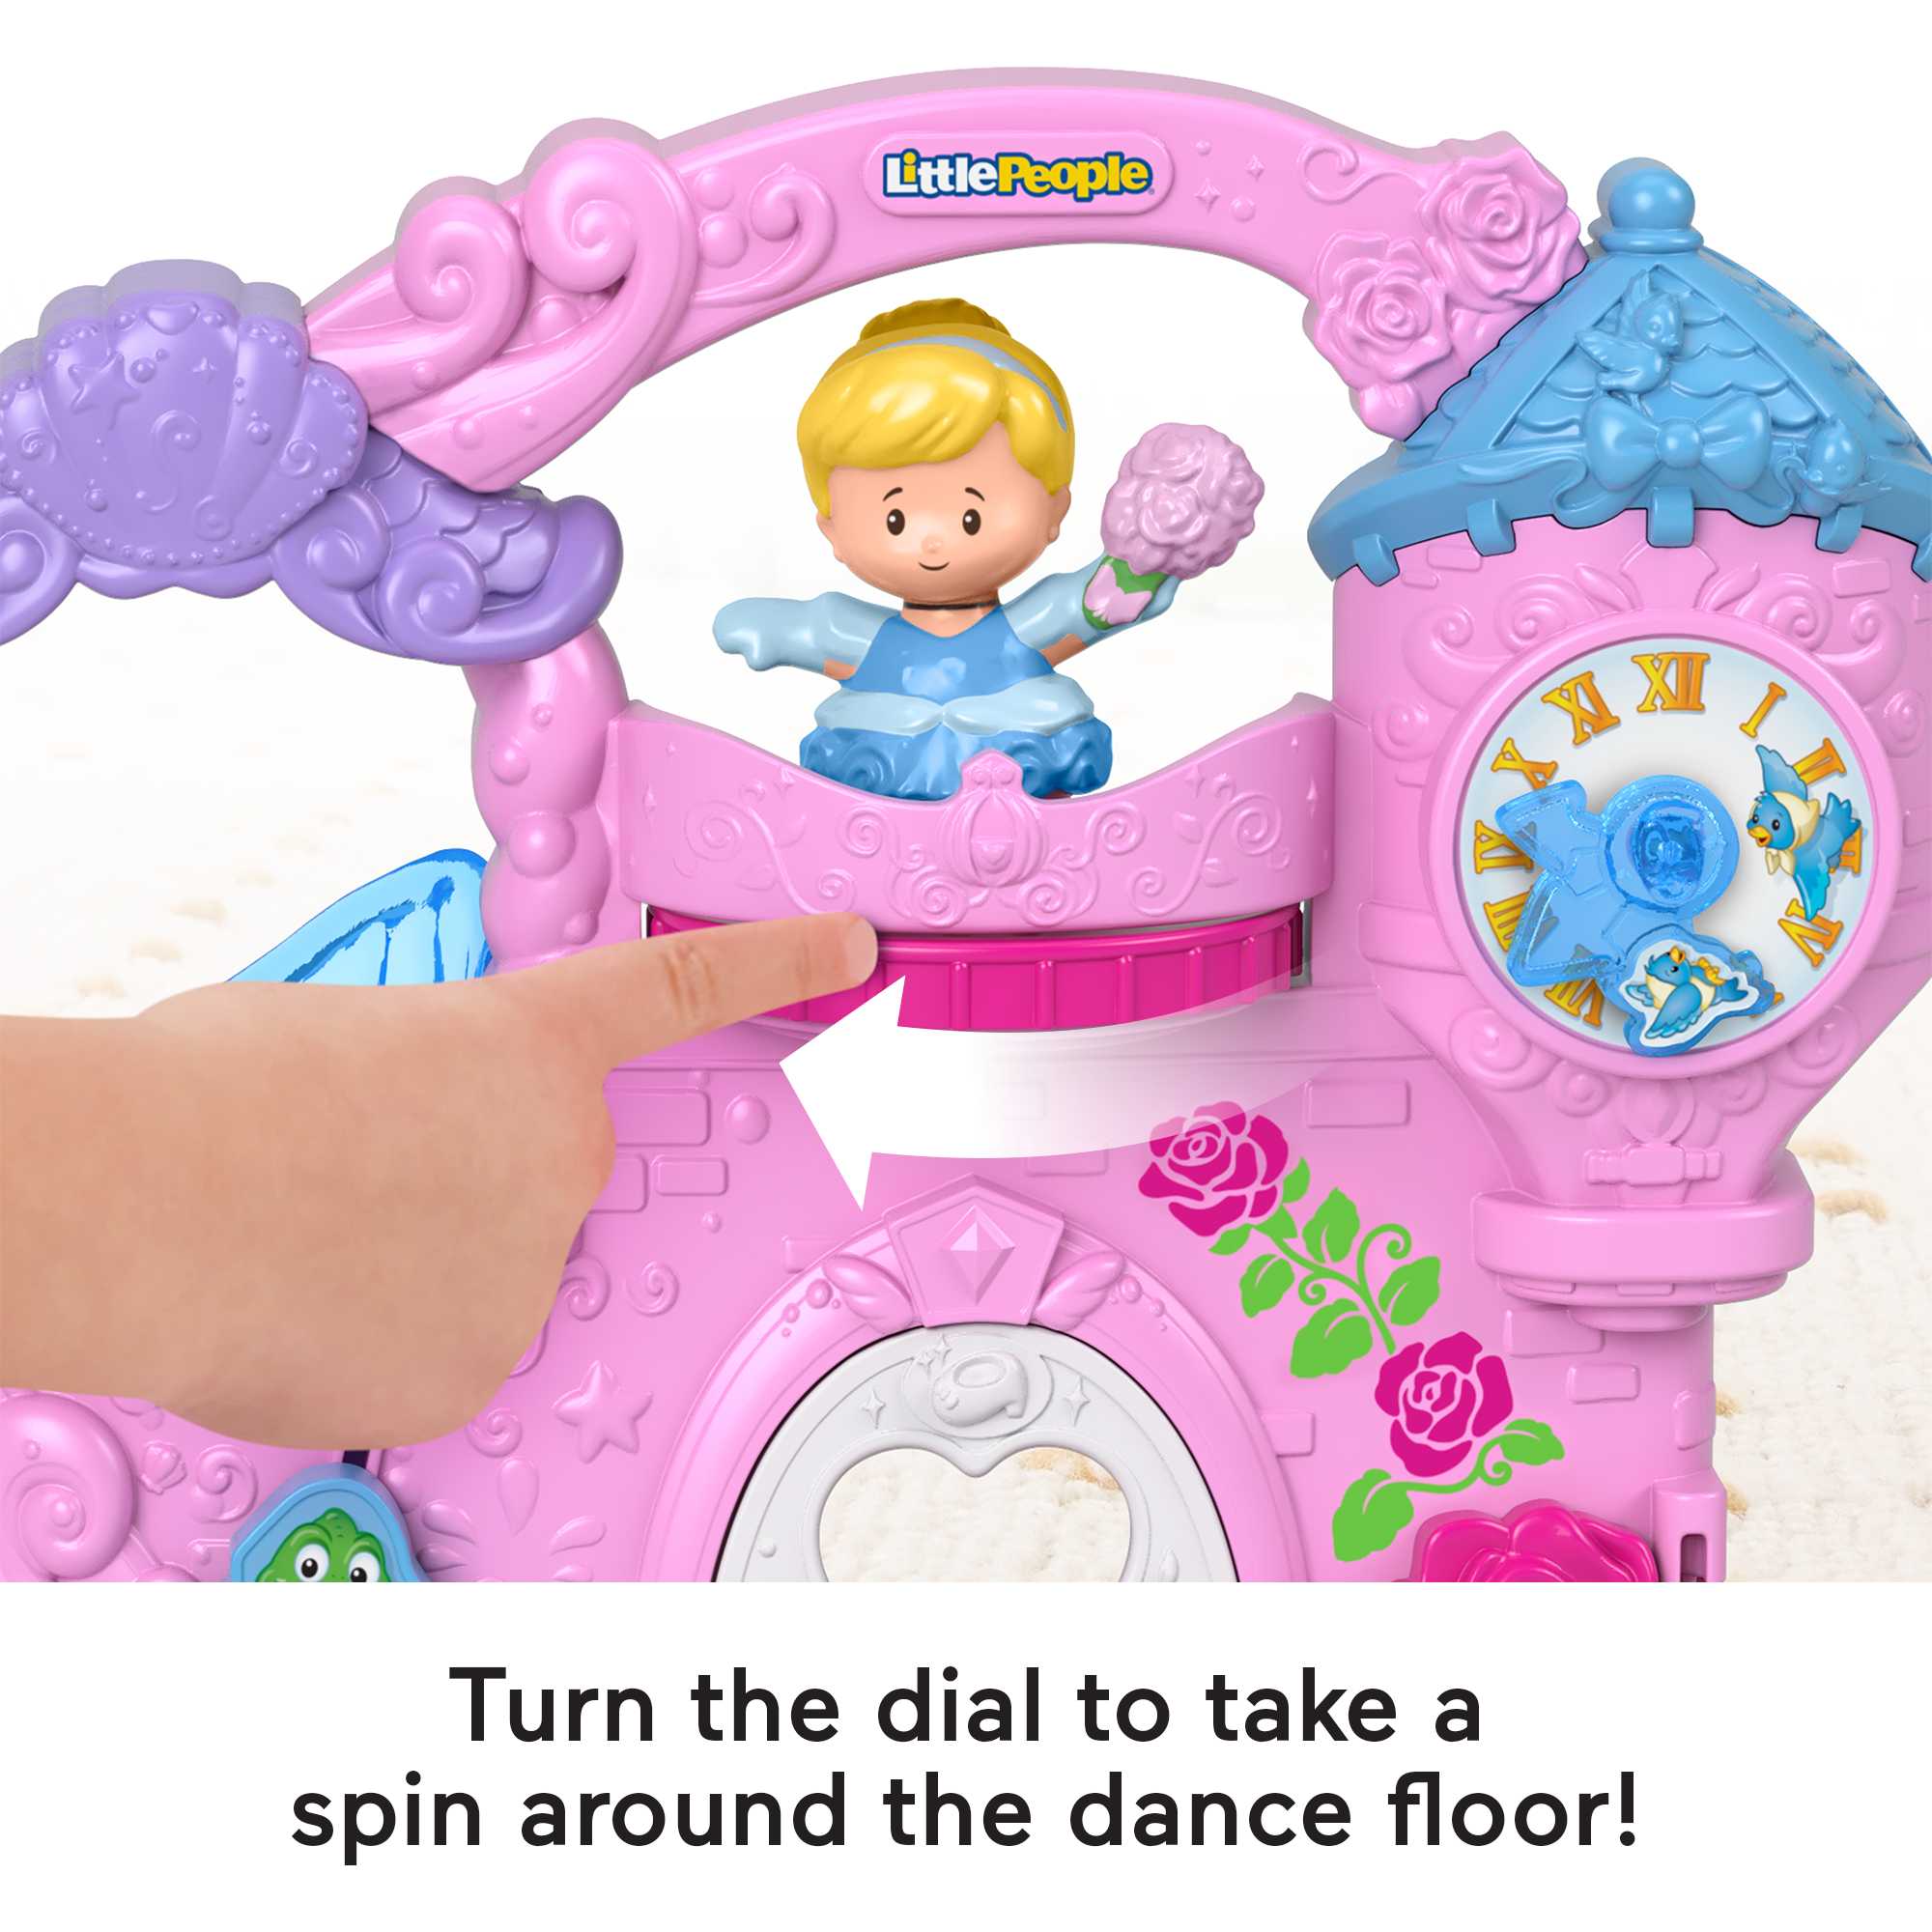 Disney Princess Toddler Toys Little People Prince and Princess